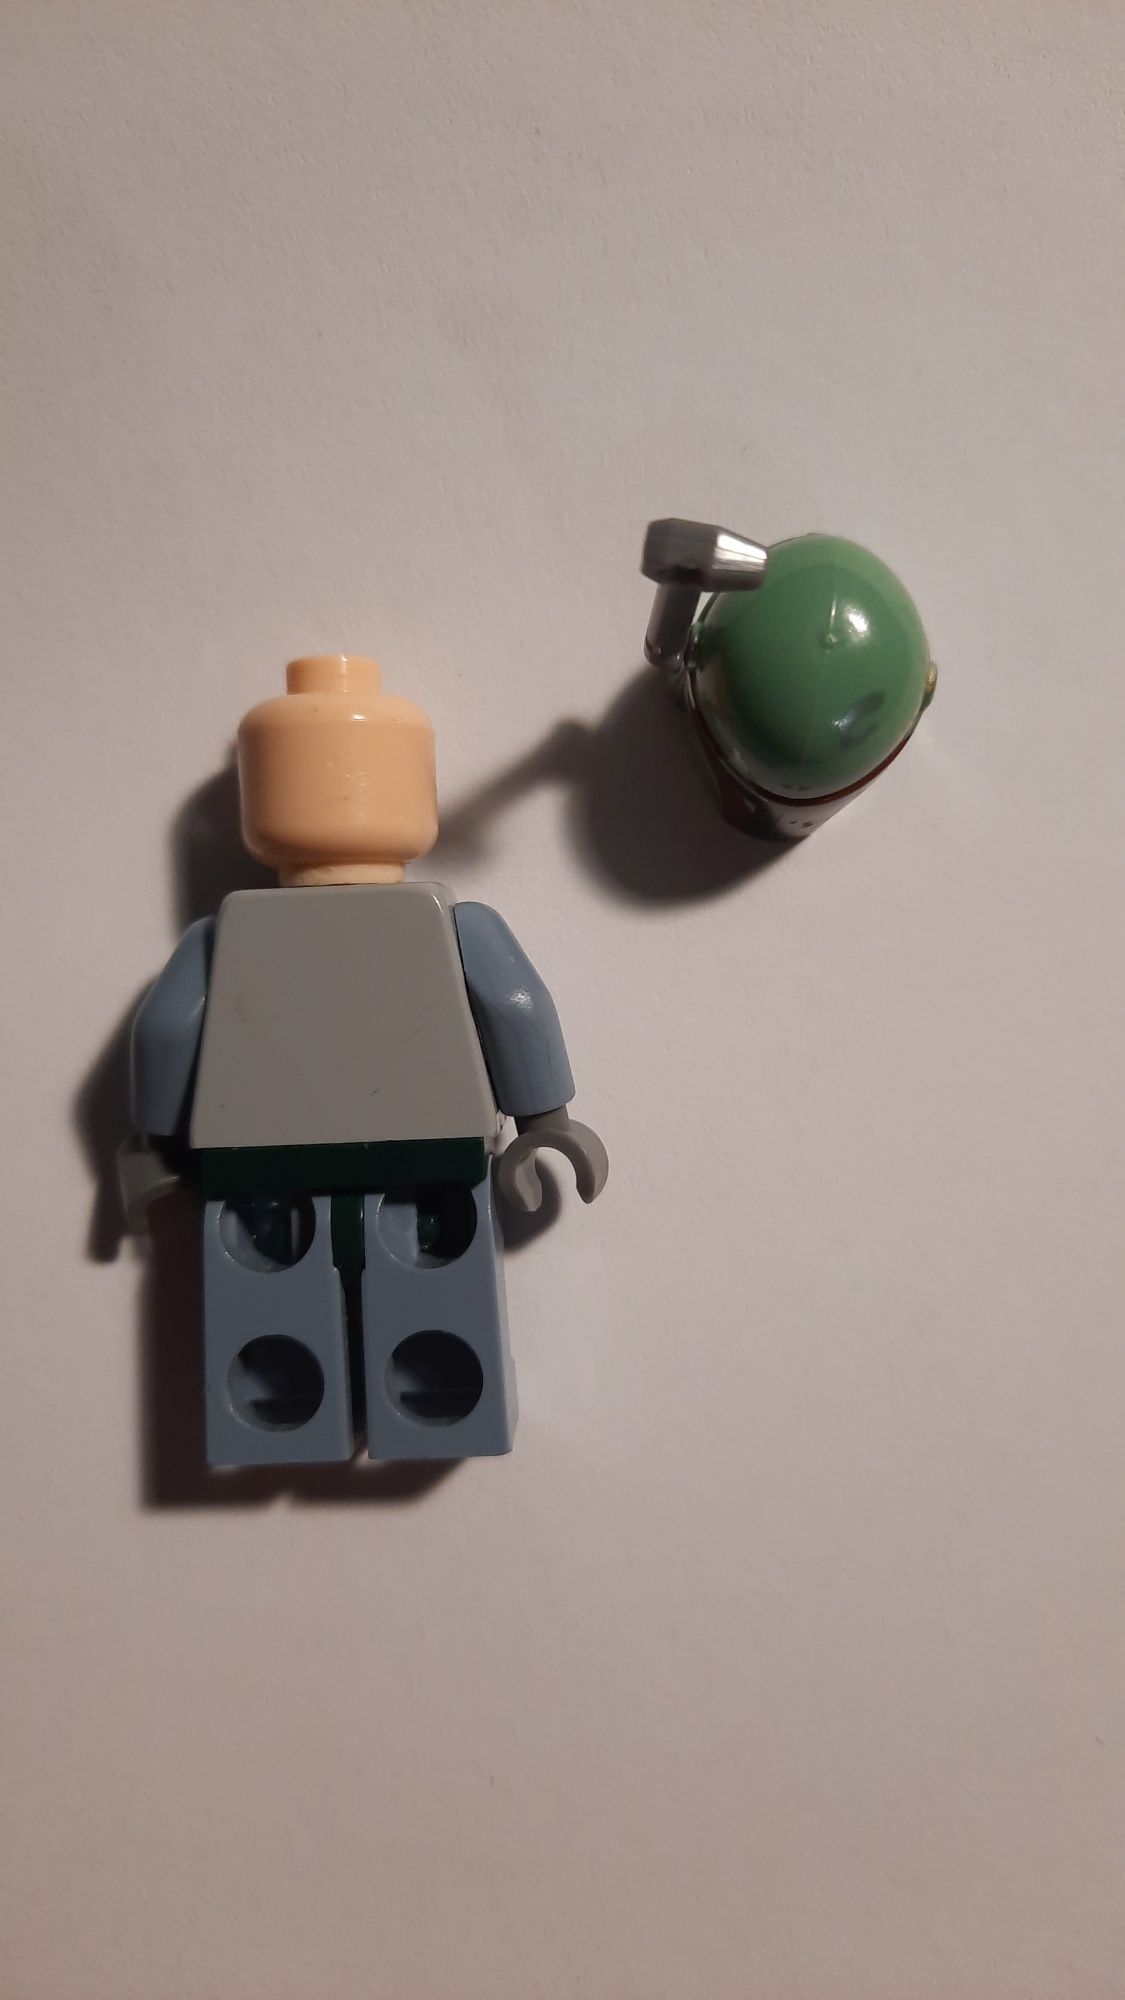 Boba Fett - Minifigurka Lego Star Wars